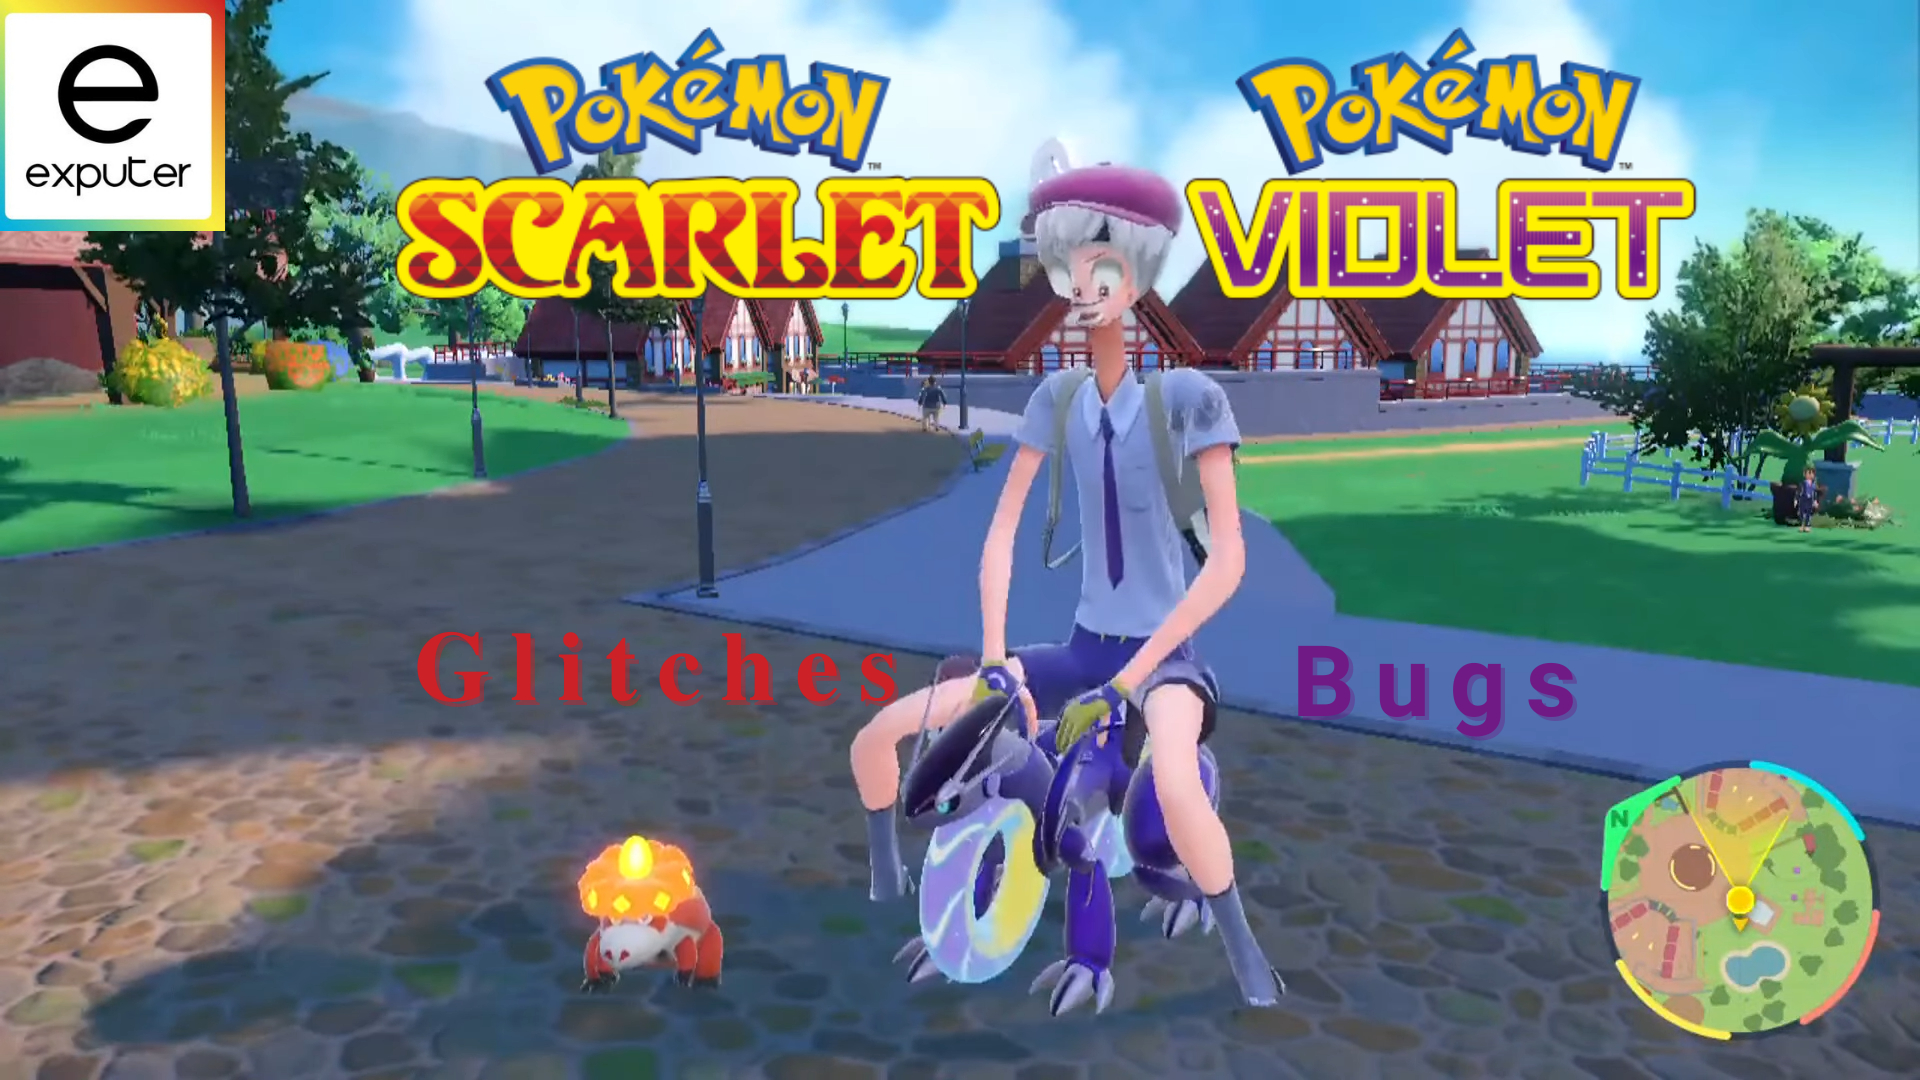 Pokemon Scarlet and Violet is already playable on PC via Nintendo Switch  emulators